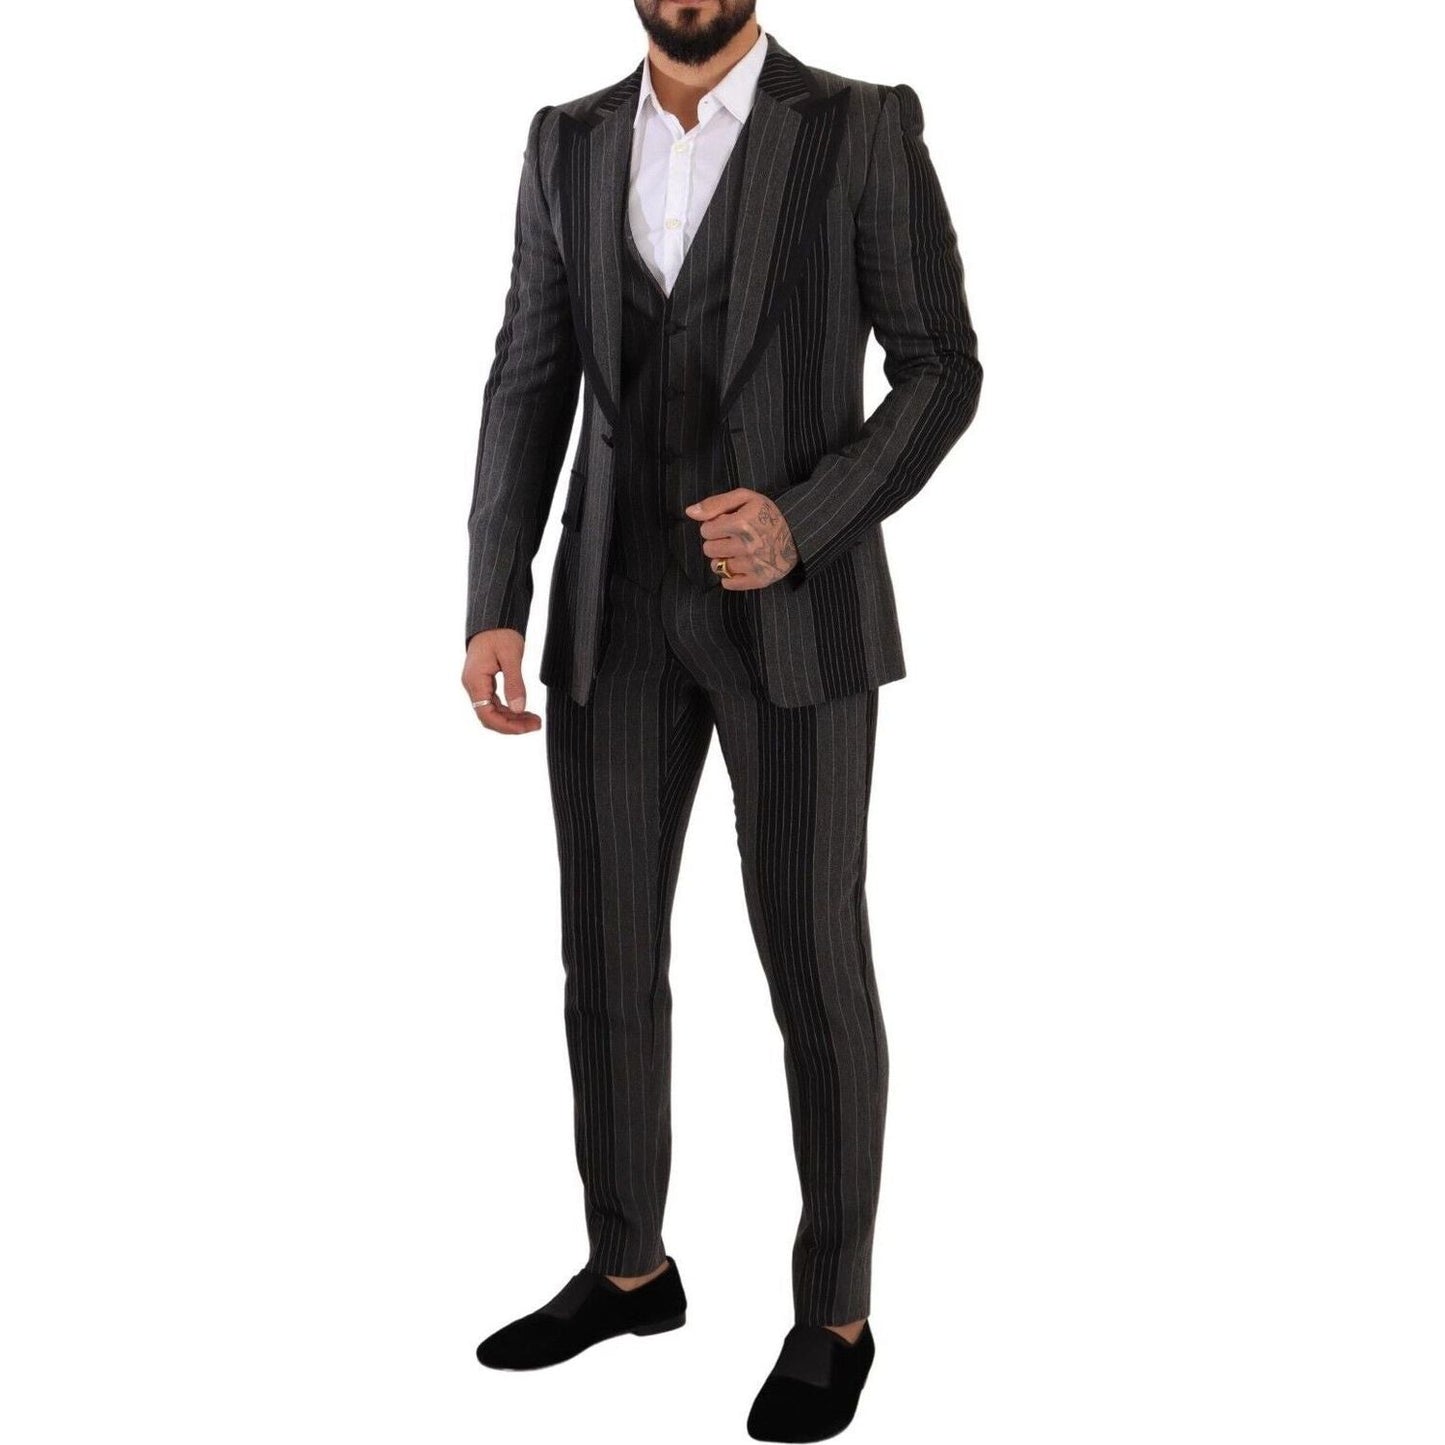 Dolce & Gabbana Elegant Striped Three-Piece Suit black-gray-striped-slim-fit-3-piece-suit